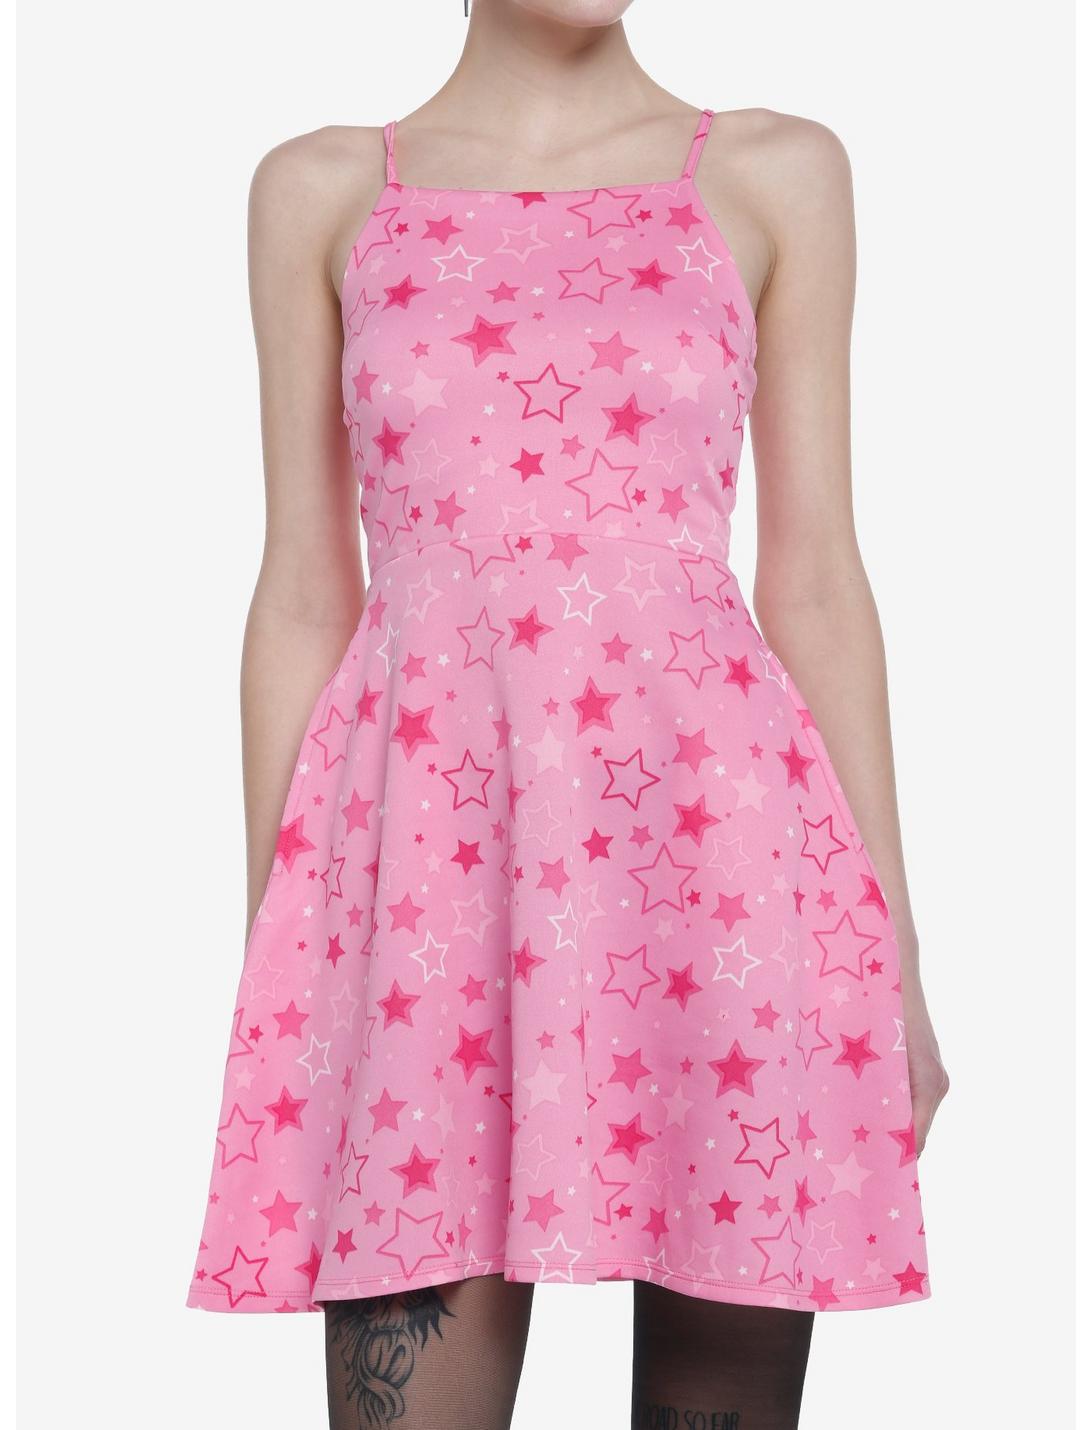 Hot Pink Stars Strappy Tank Dress, PINK, hi-res